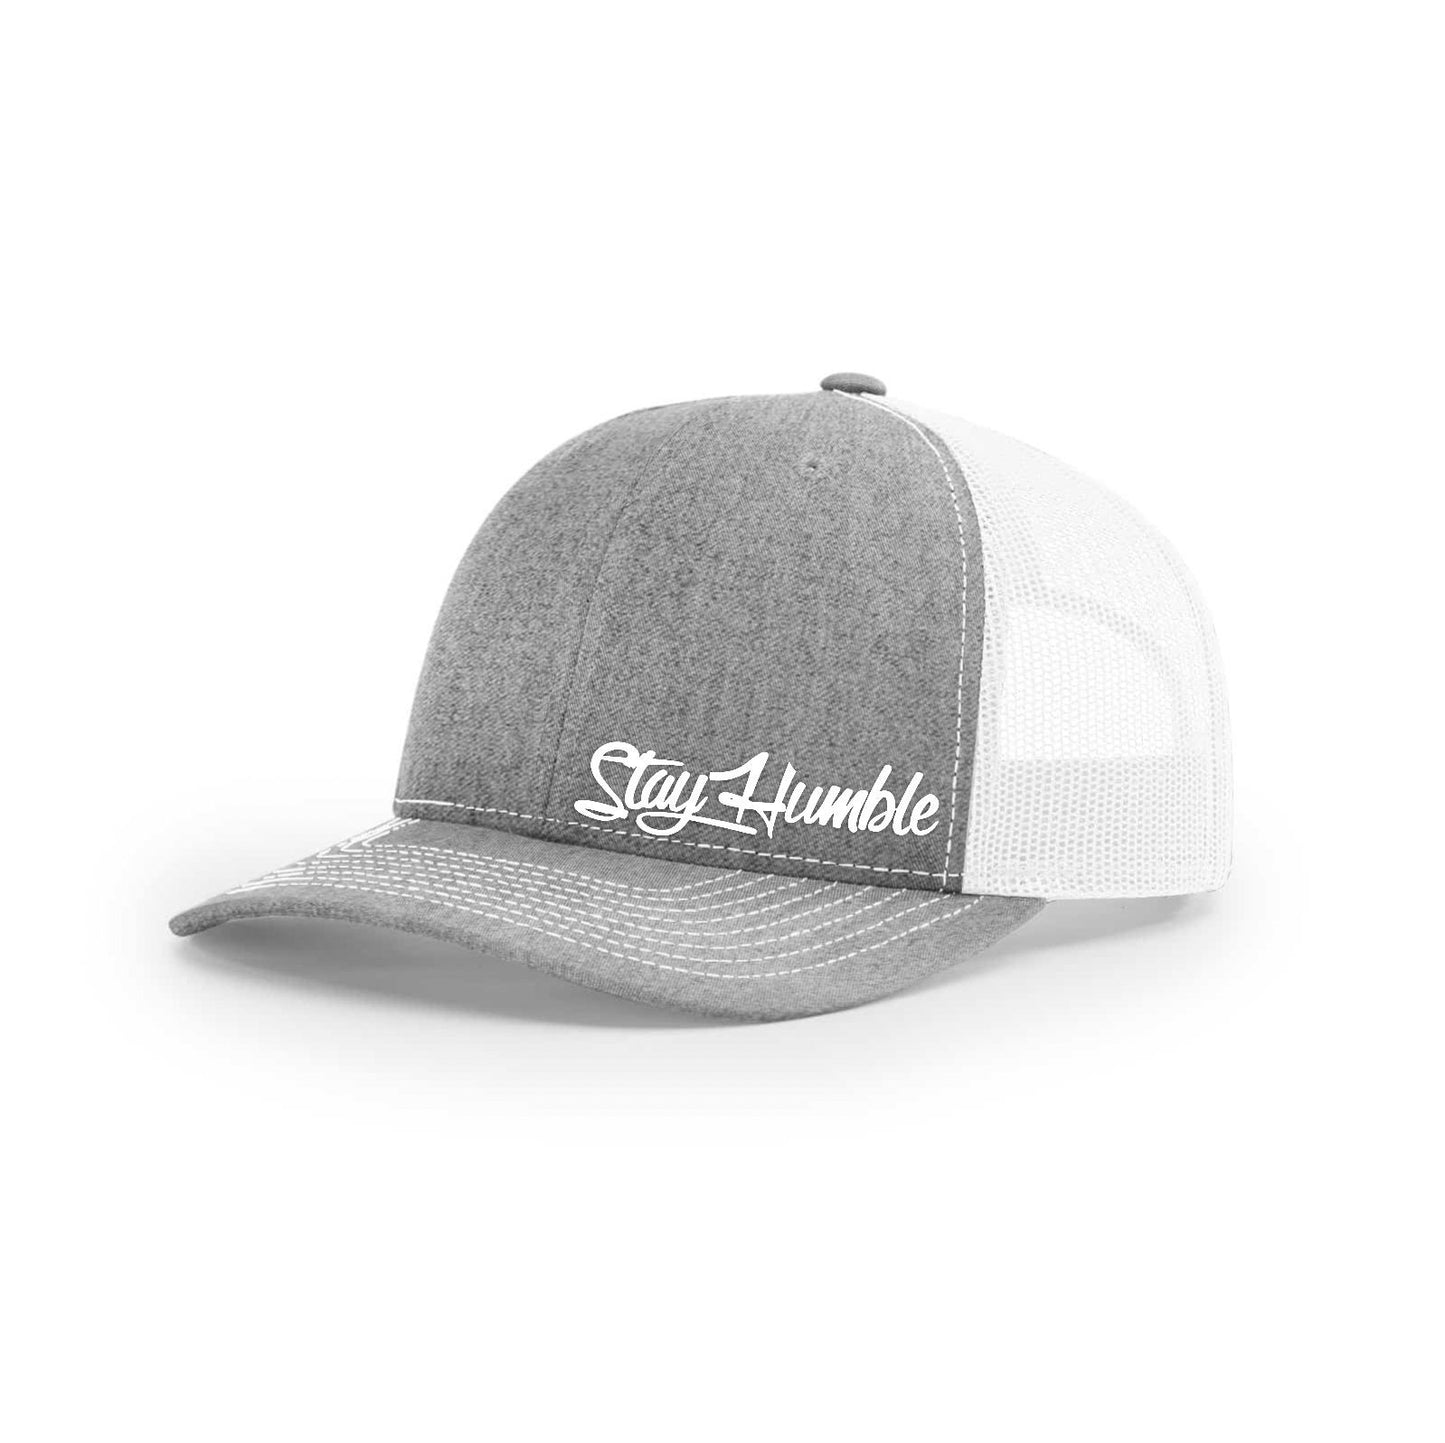 Stay Humble R-FLEX Richardson 110 Stretch Hat